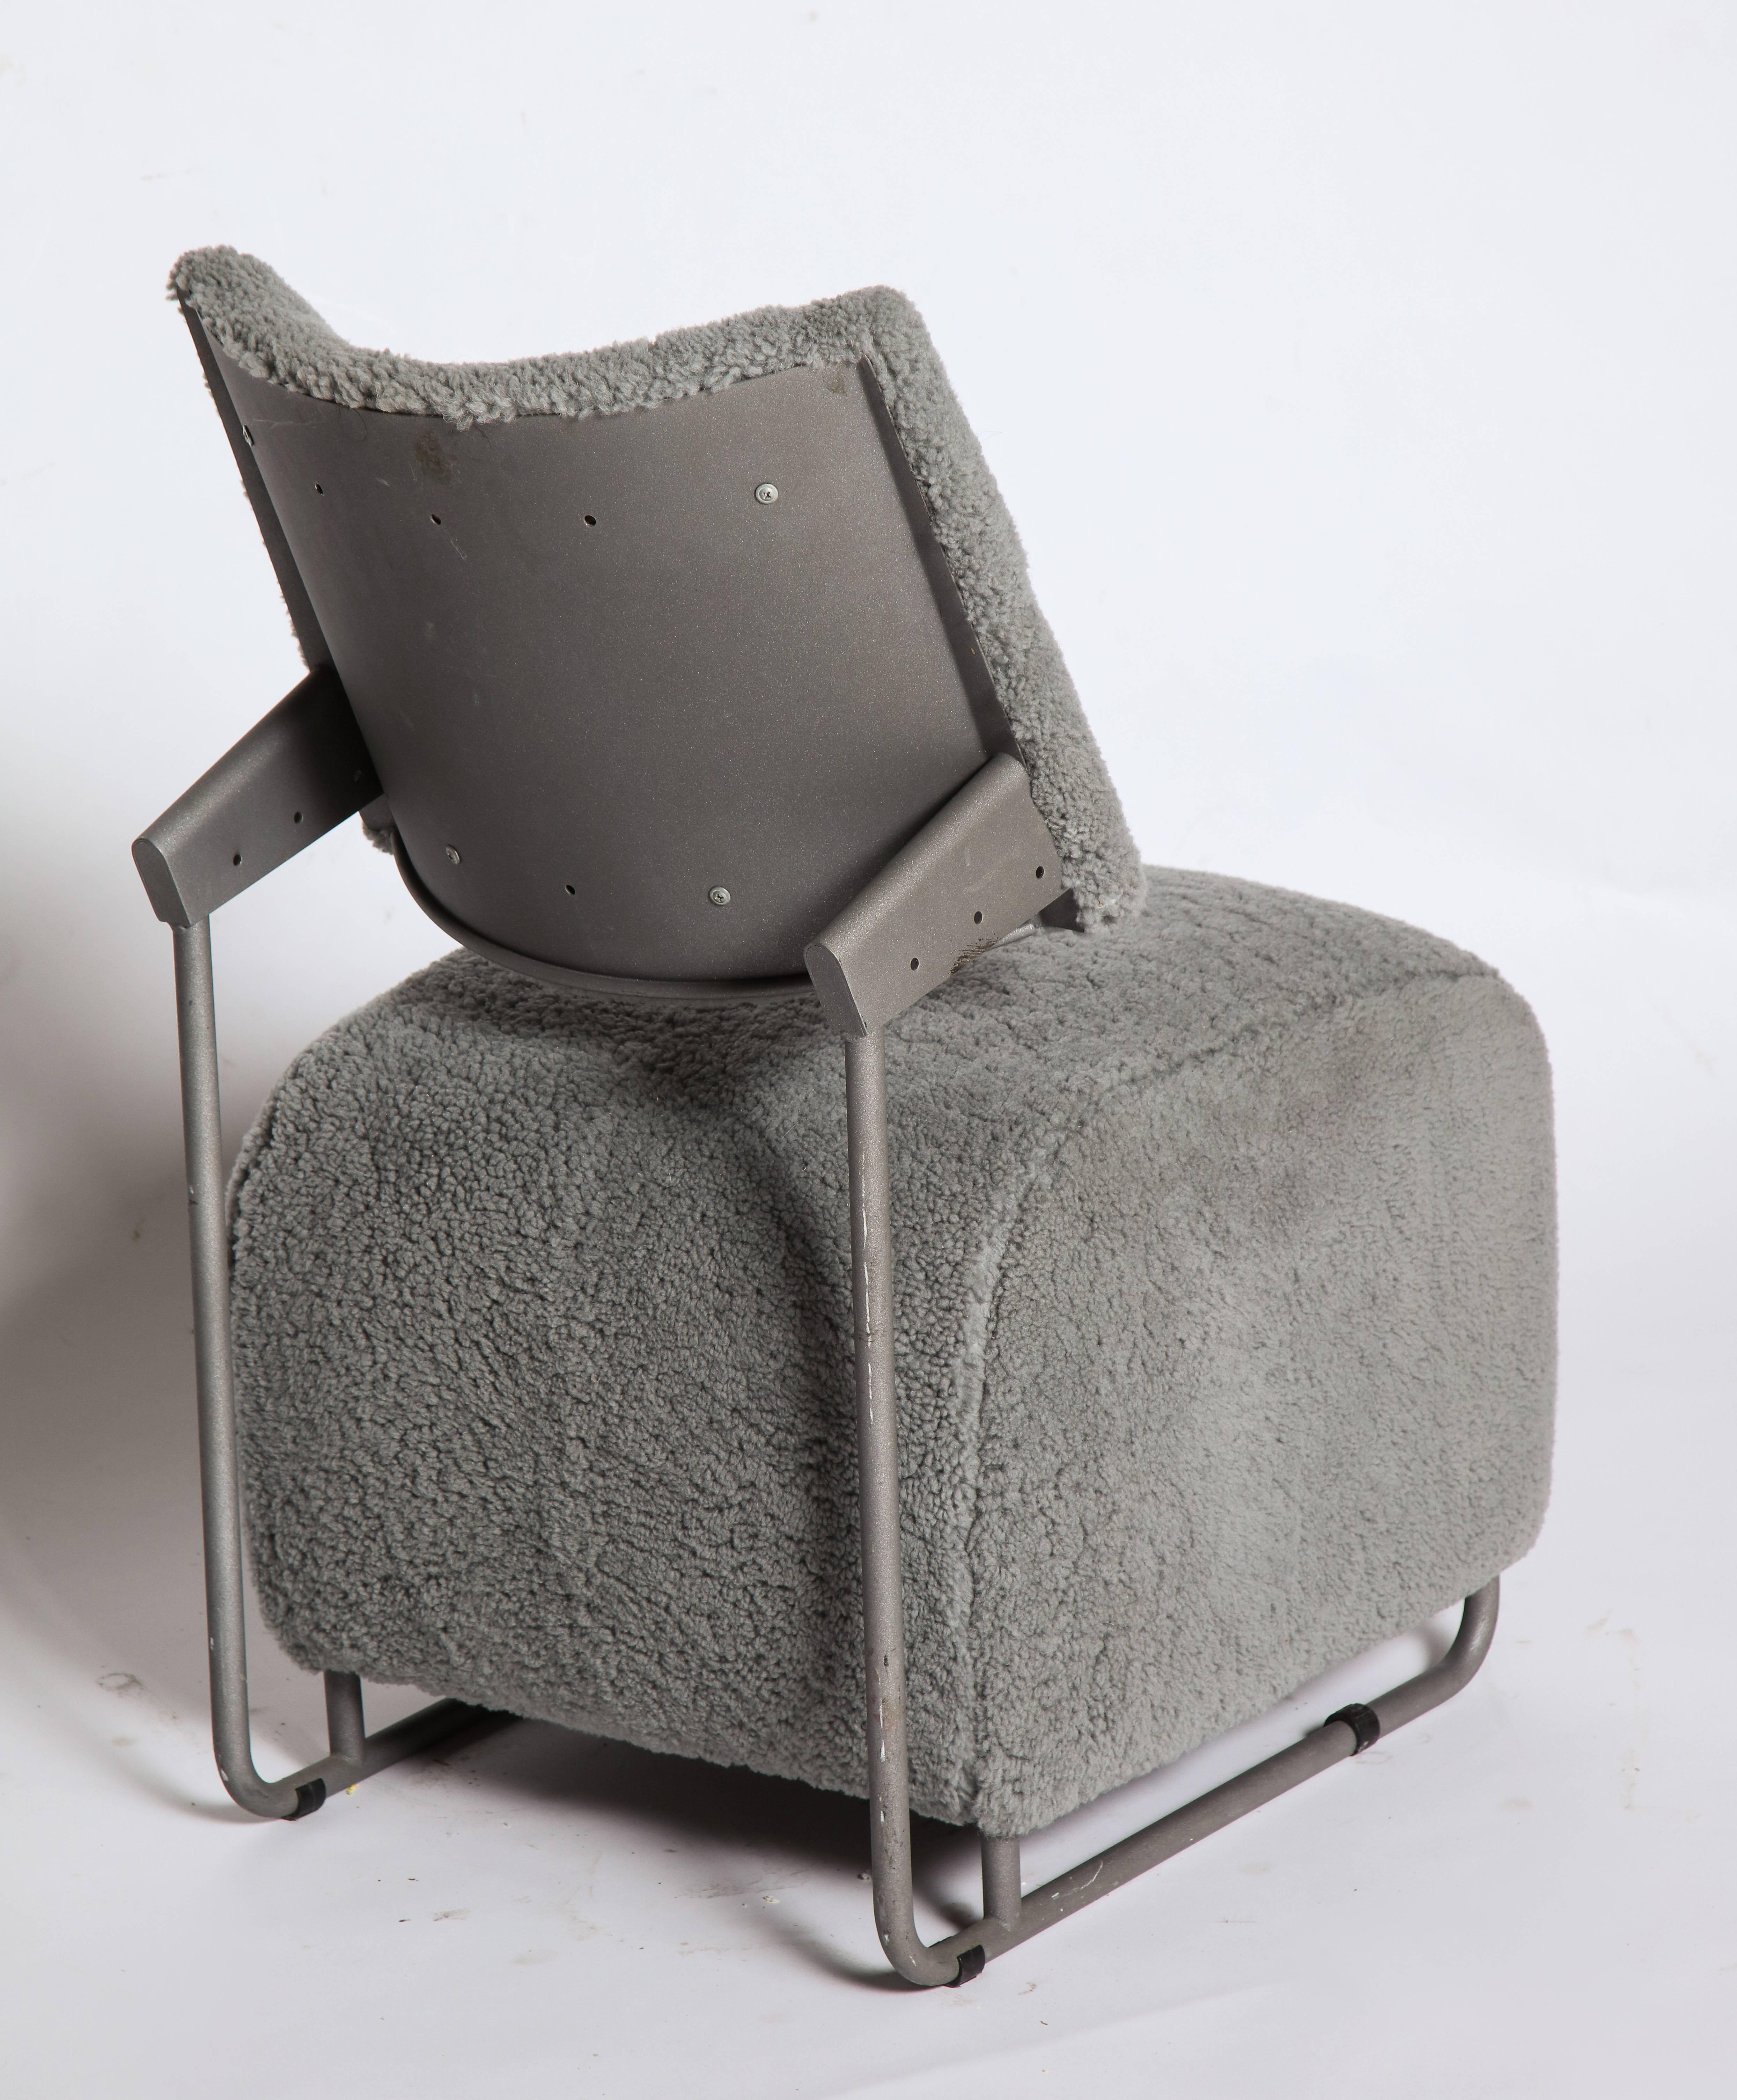 Post-Modern Harri Kohonen Oscar Pair of Grey Shearling Metal Chairs Postmodern, Finland